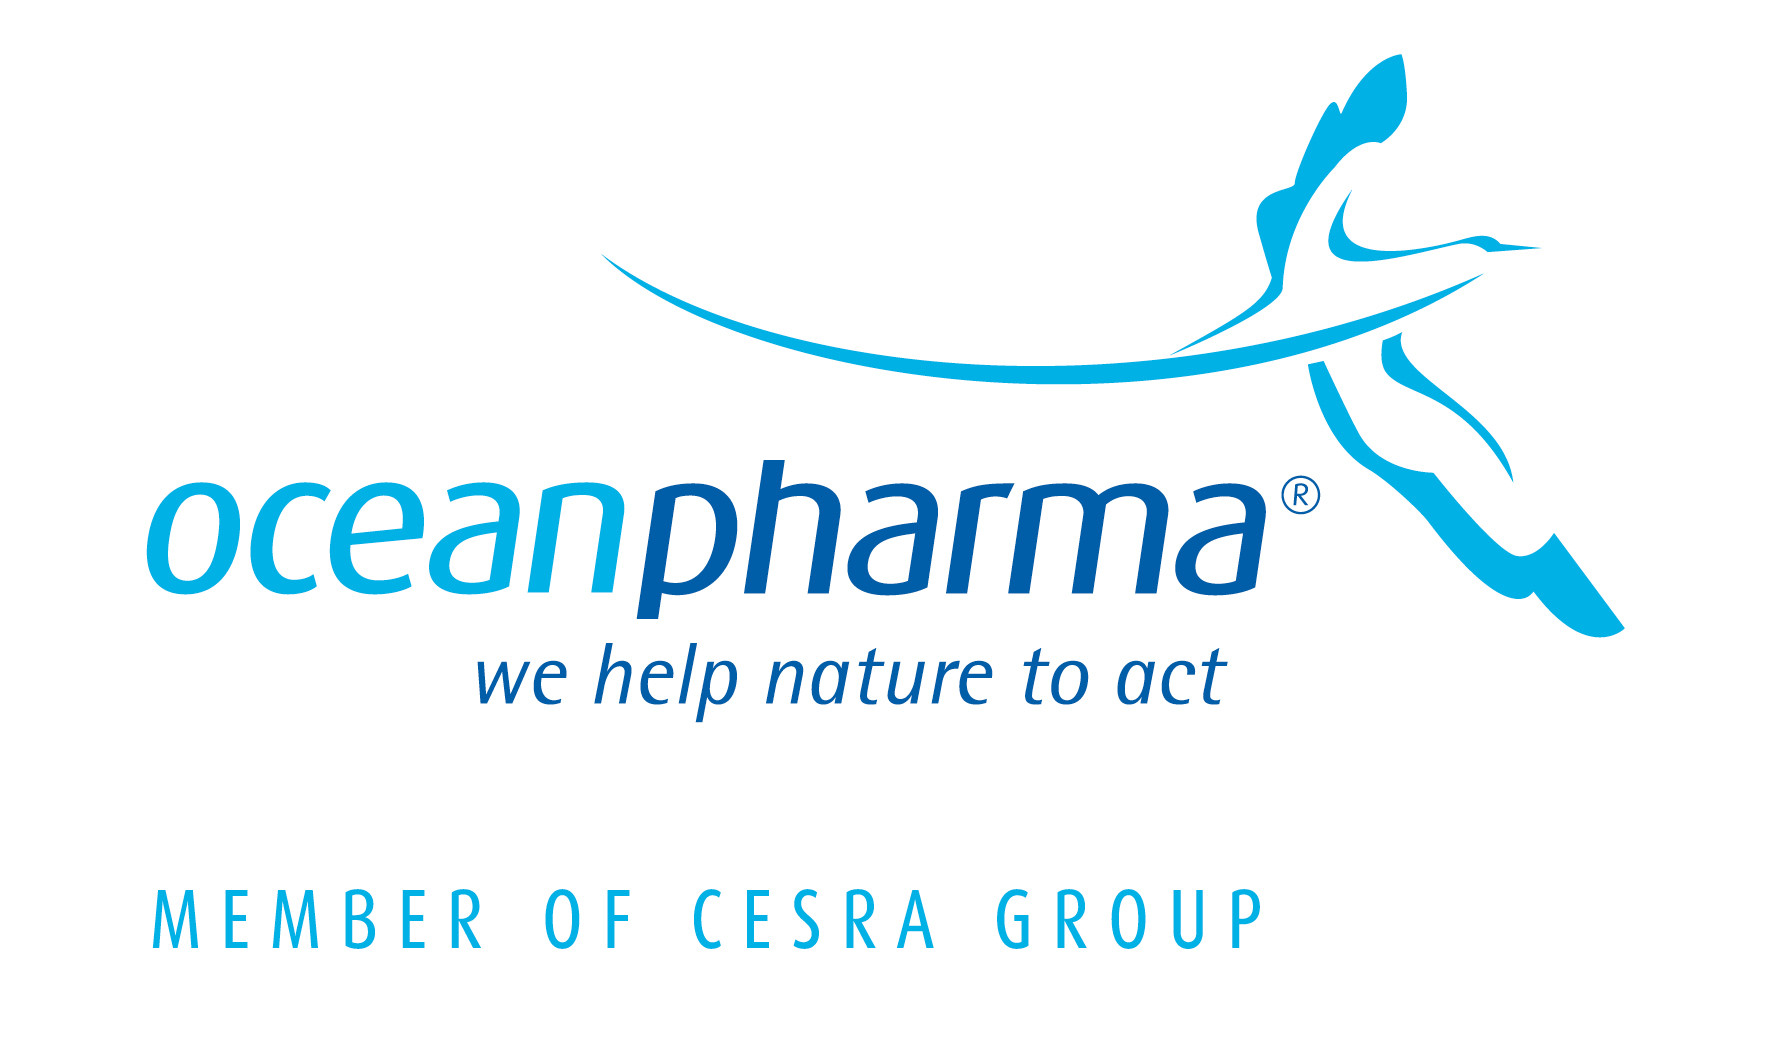 Ocean Pharma GmbH